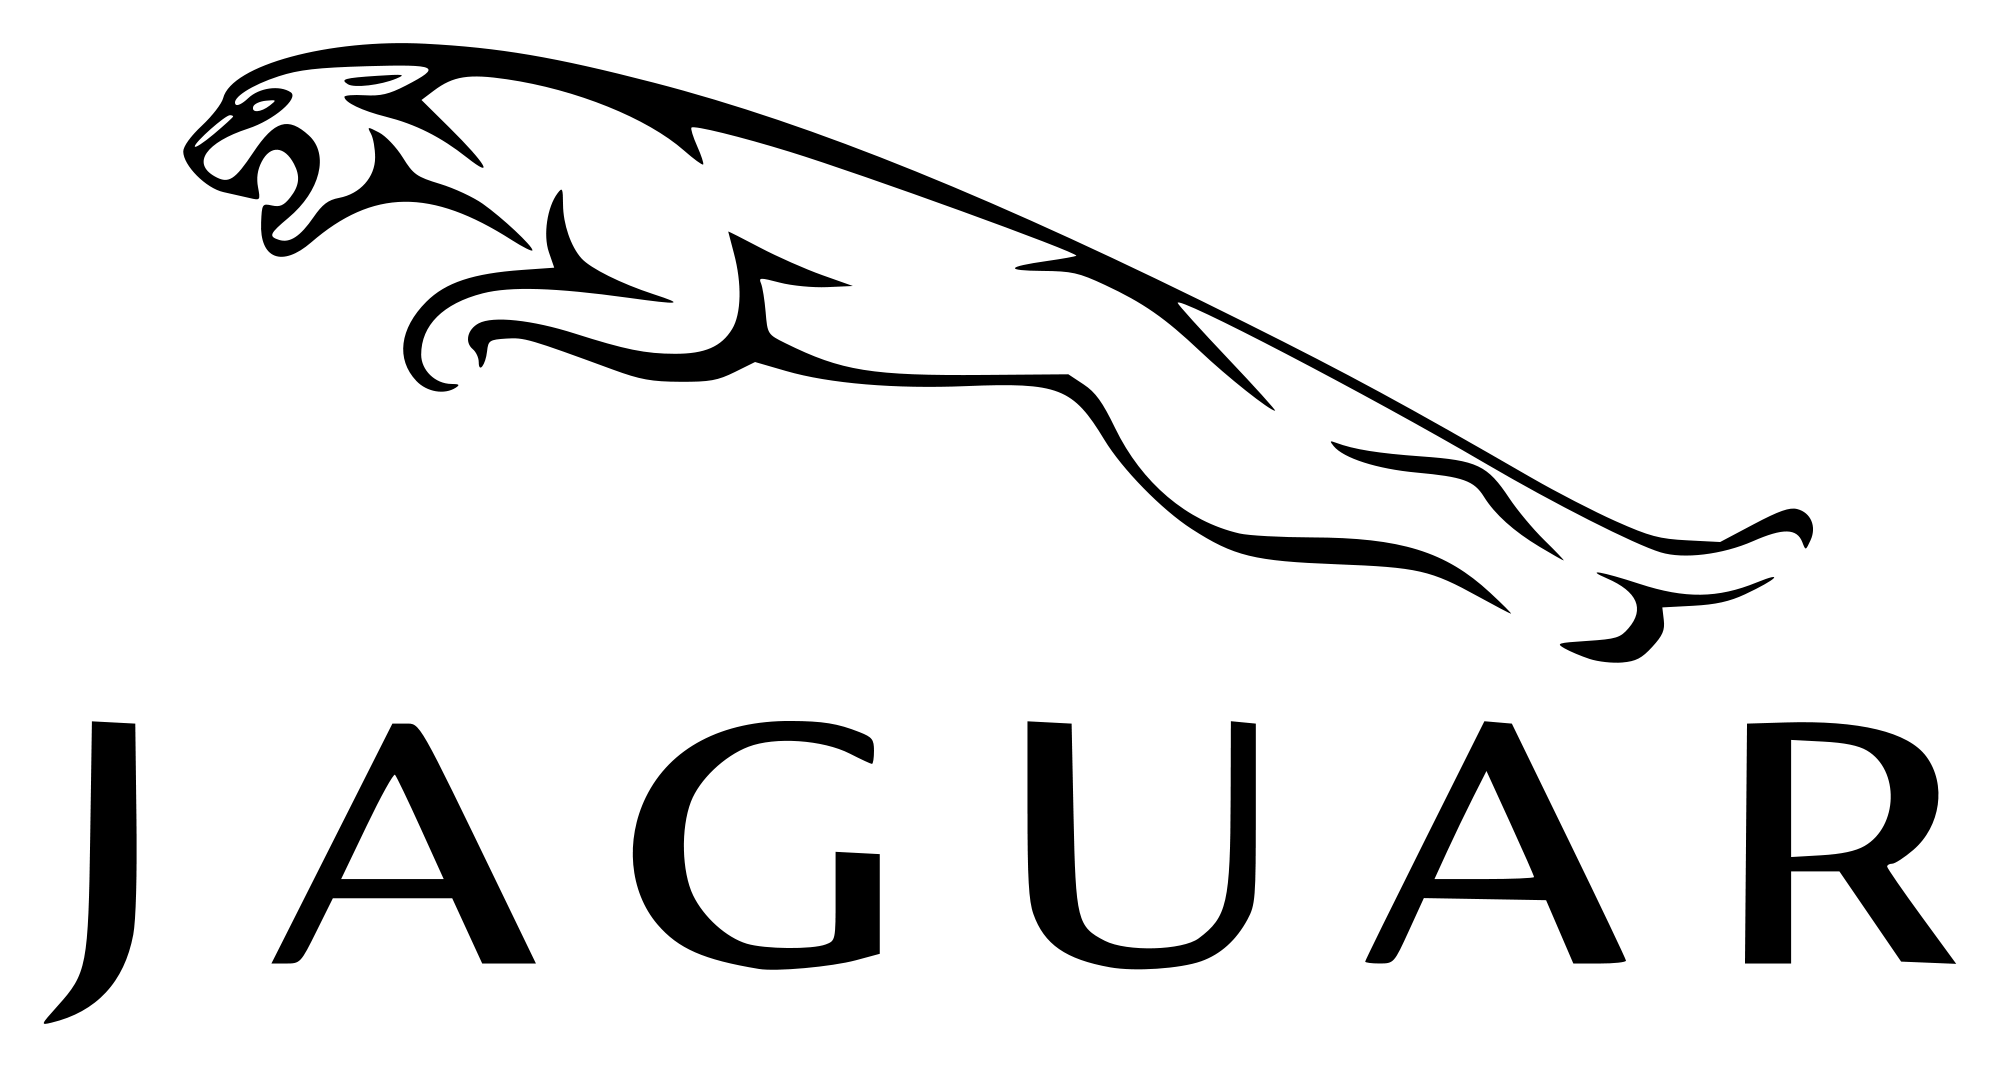 Black and White Animal Logo - Jaguar Logo, Jaguar Car Symbol Meaning and History | Car Brand Names.com